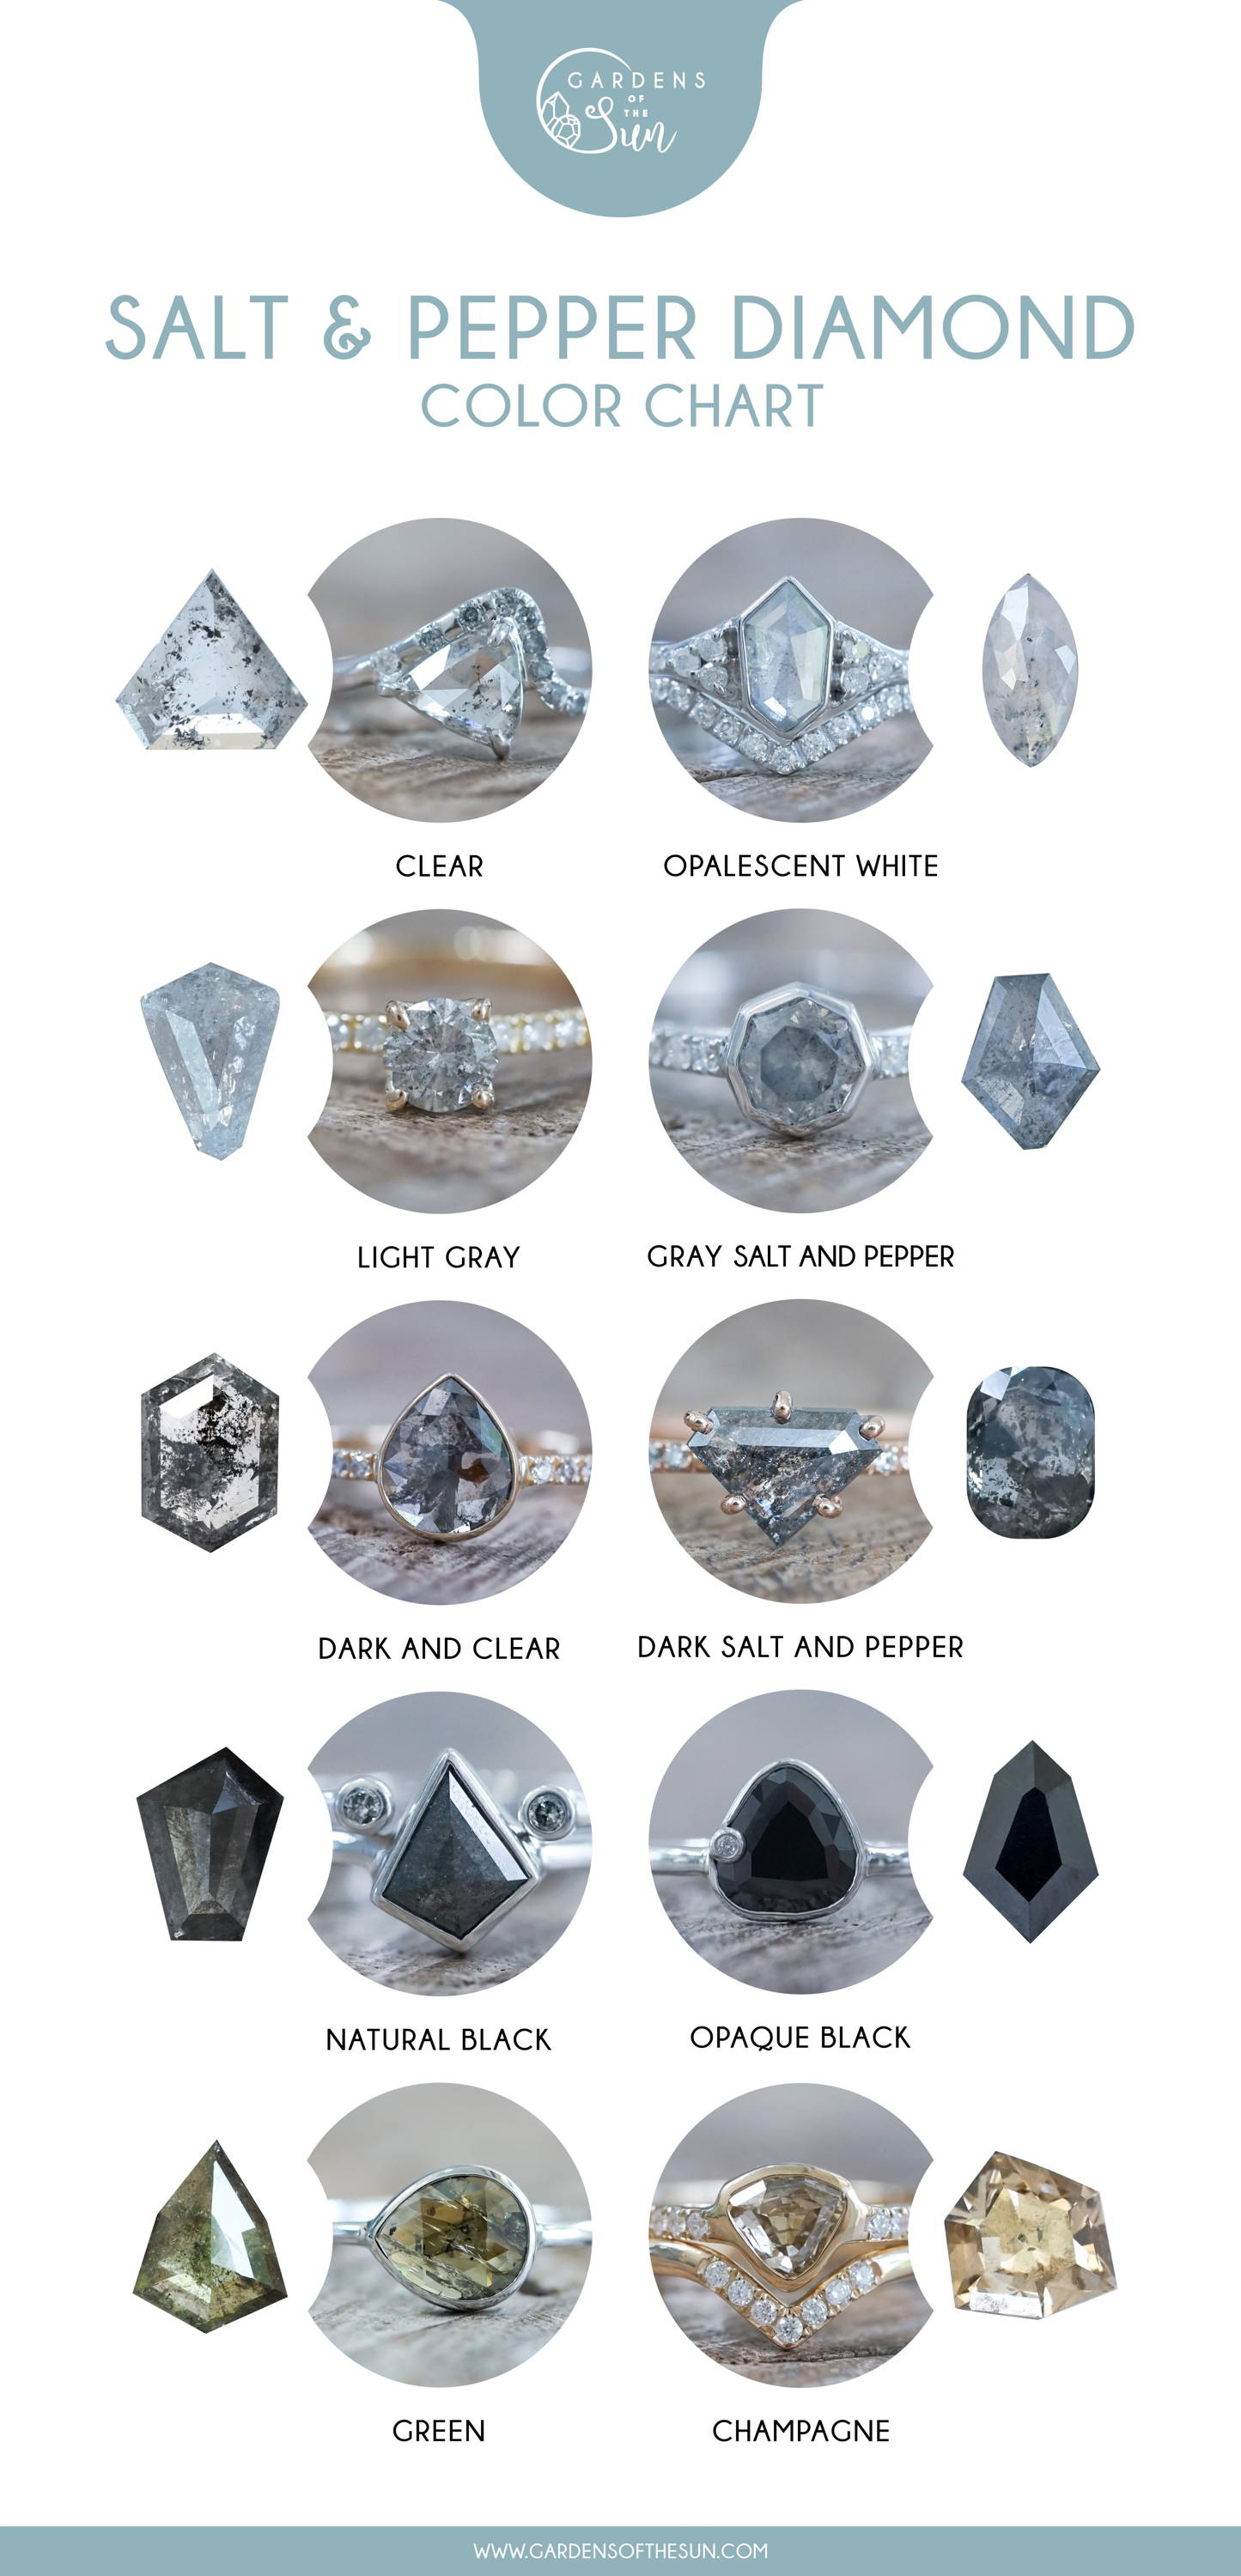 Salt and pepper diamond color chart